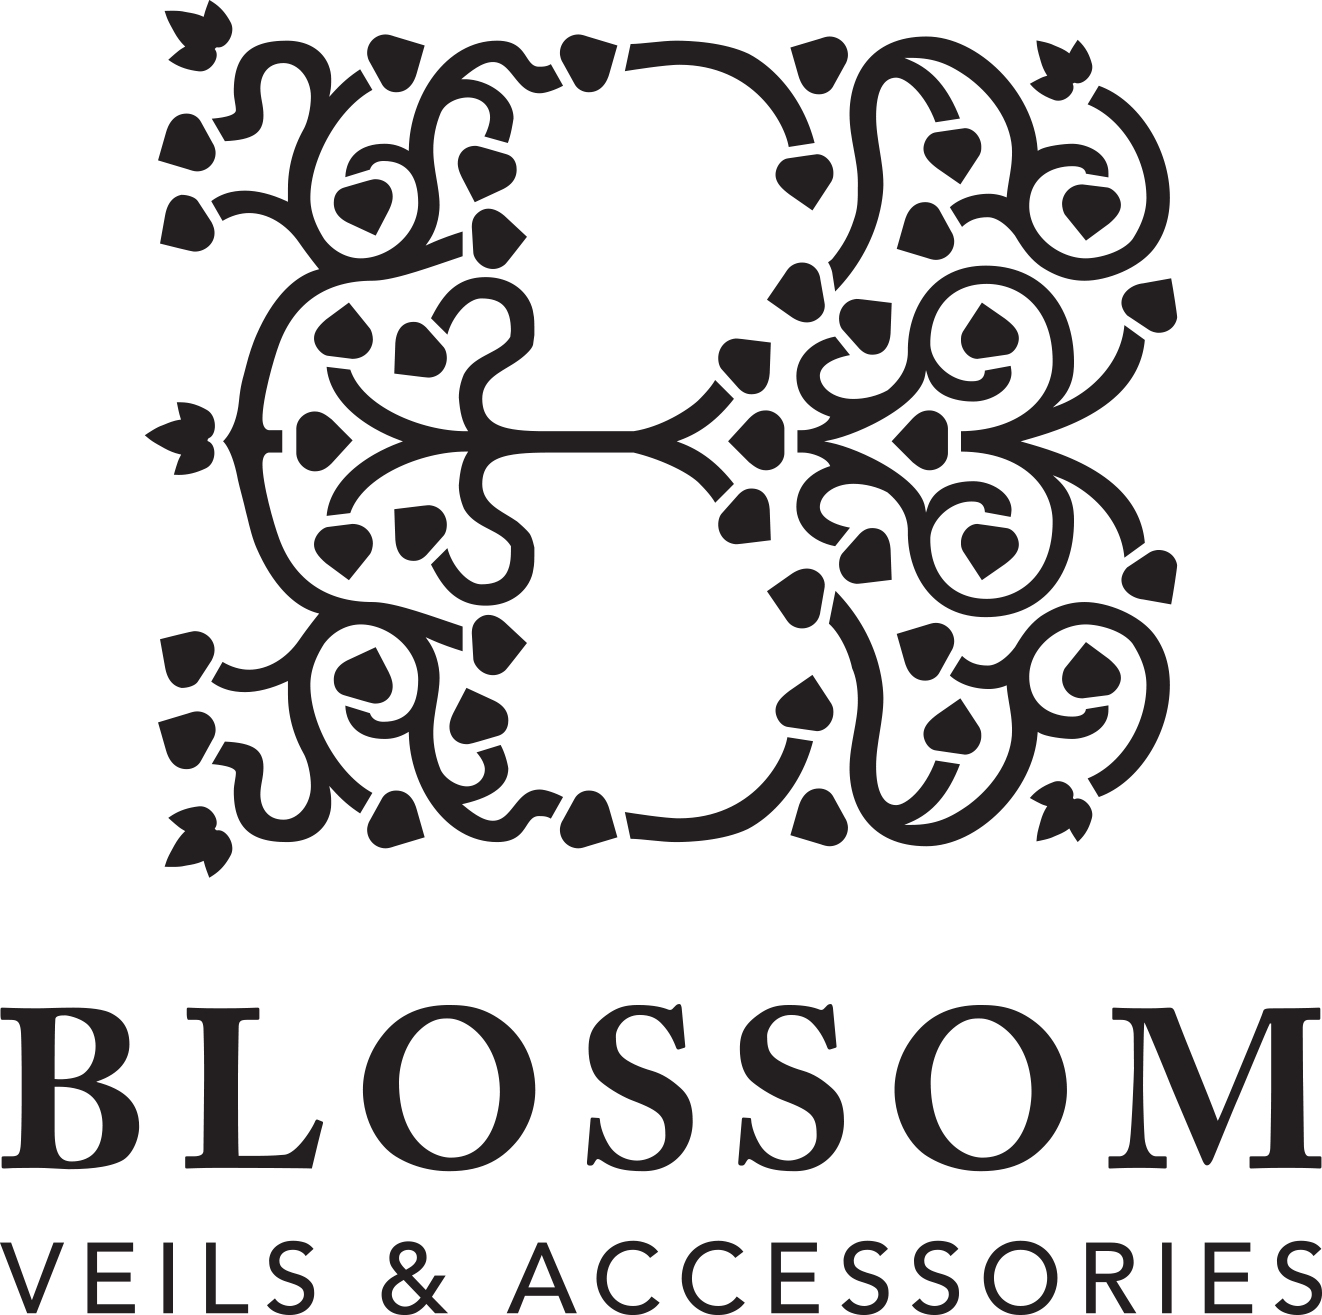 Blossom Veils & Accessories